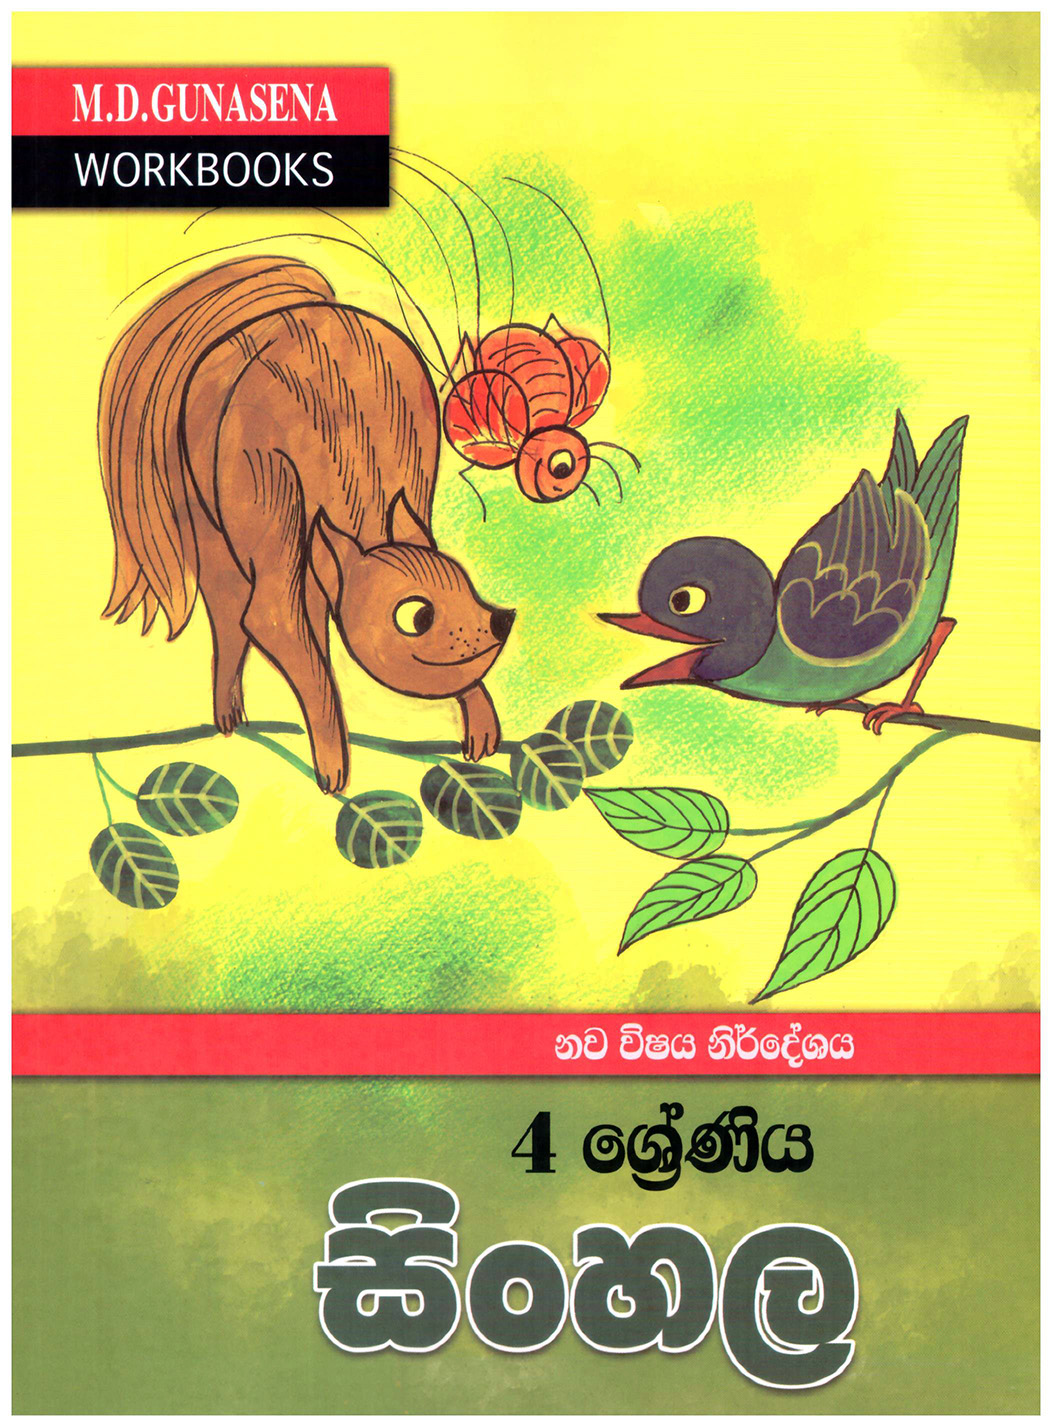 M.D. Gunasena Workbooks : Sinhala 04 Shreniya